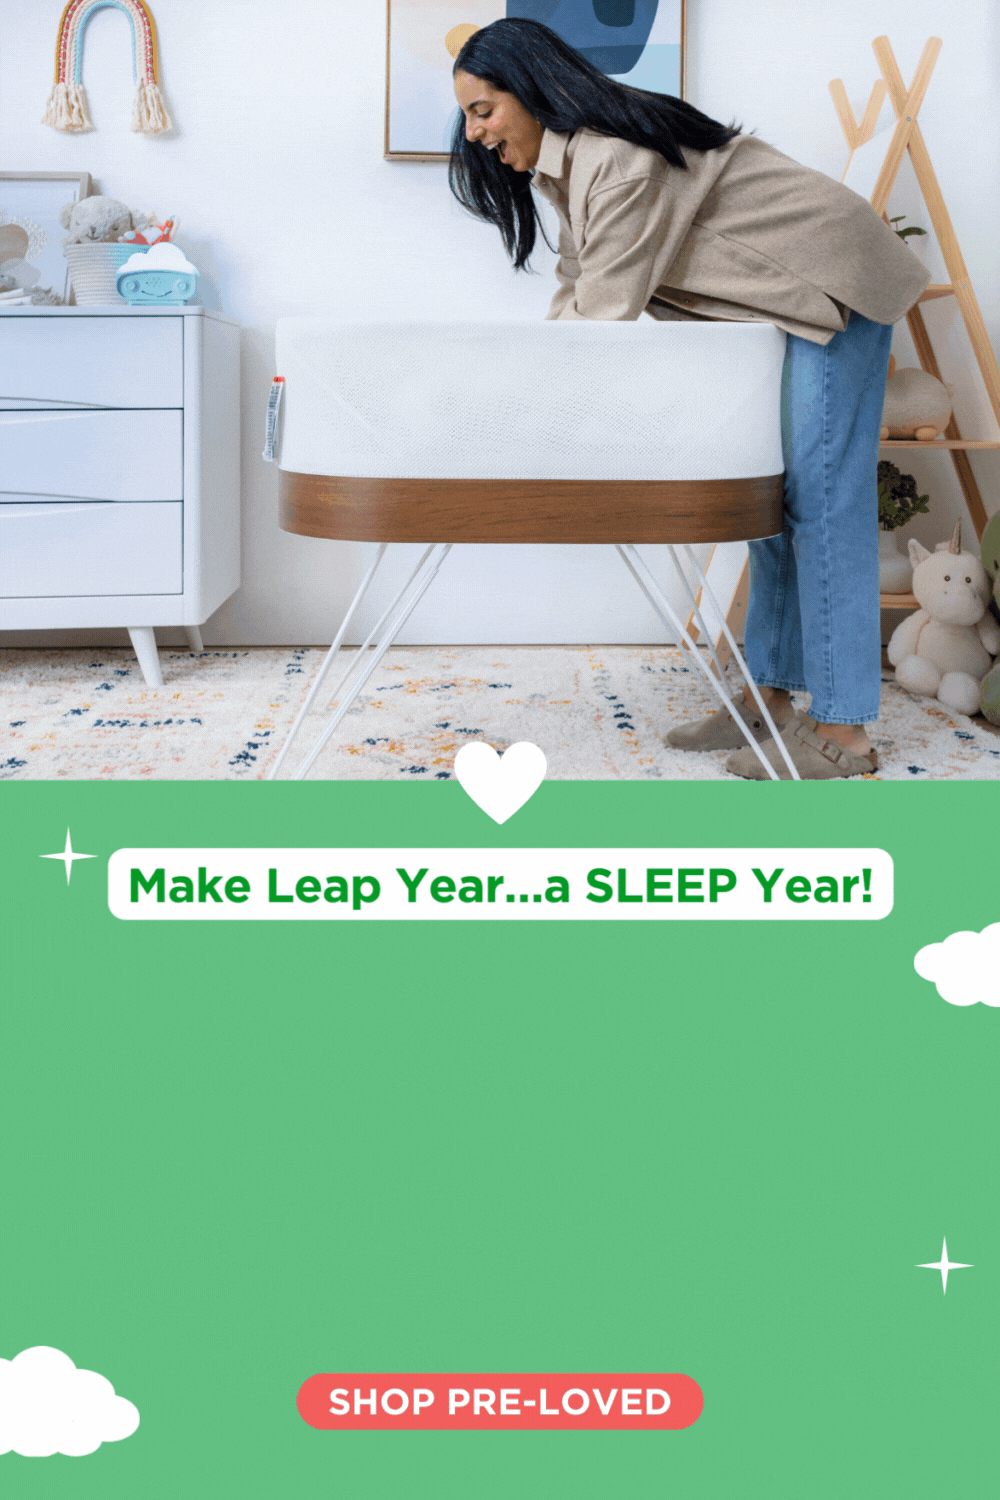 Make Leap Year...a SLEEP Year! \\$956 Pre-Loved SNOO. Shop Pre-Loved